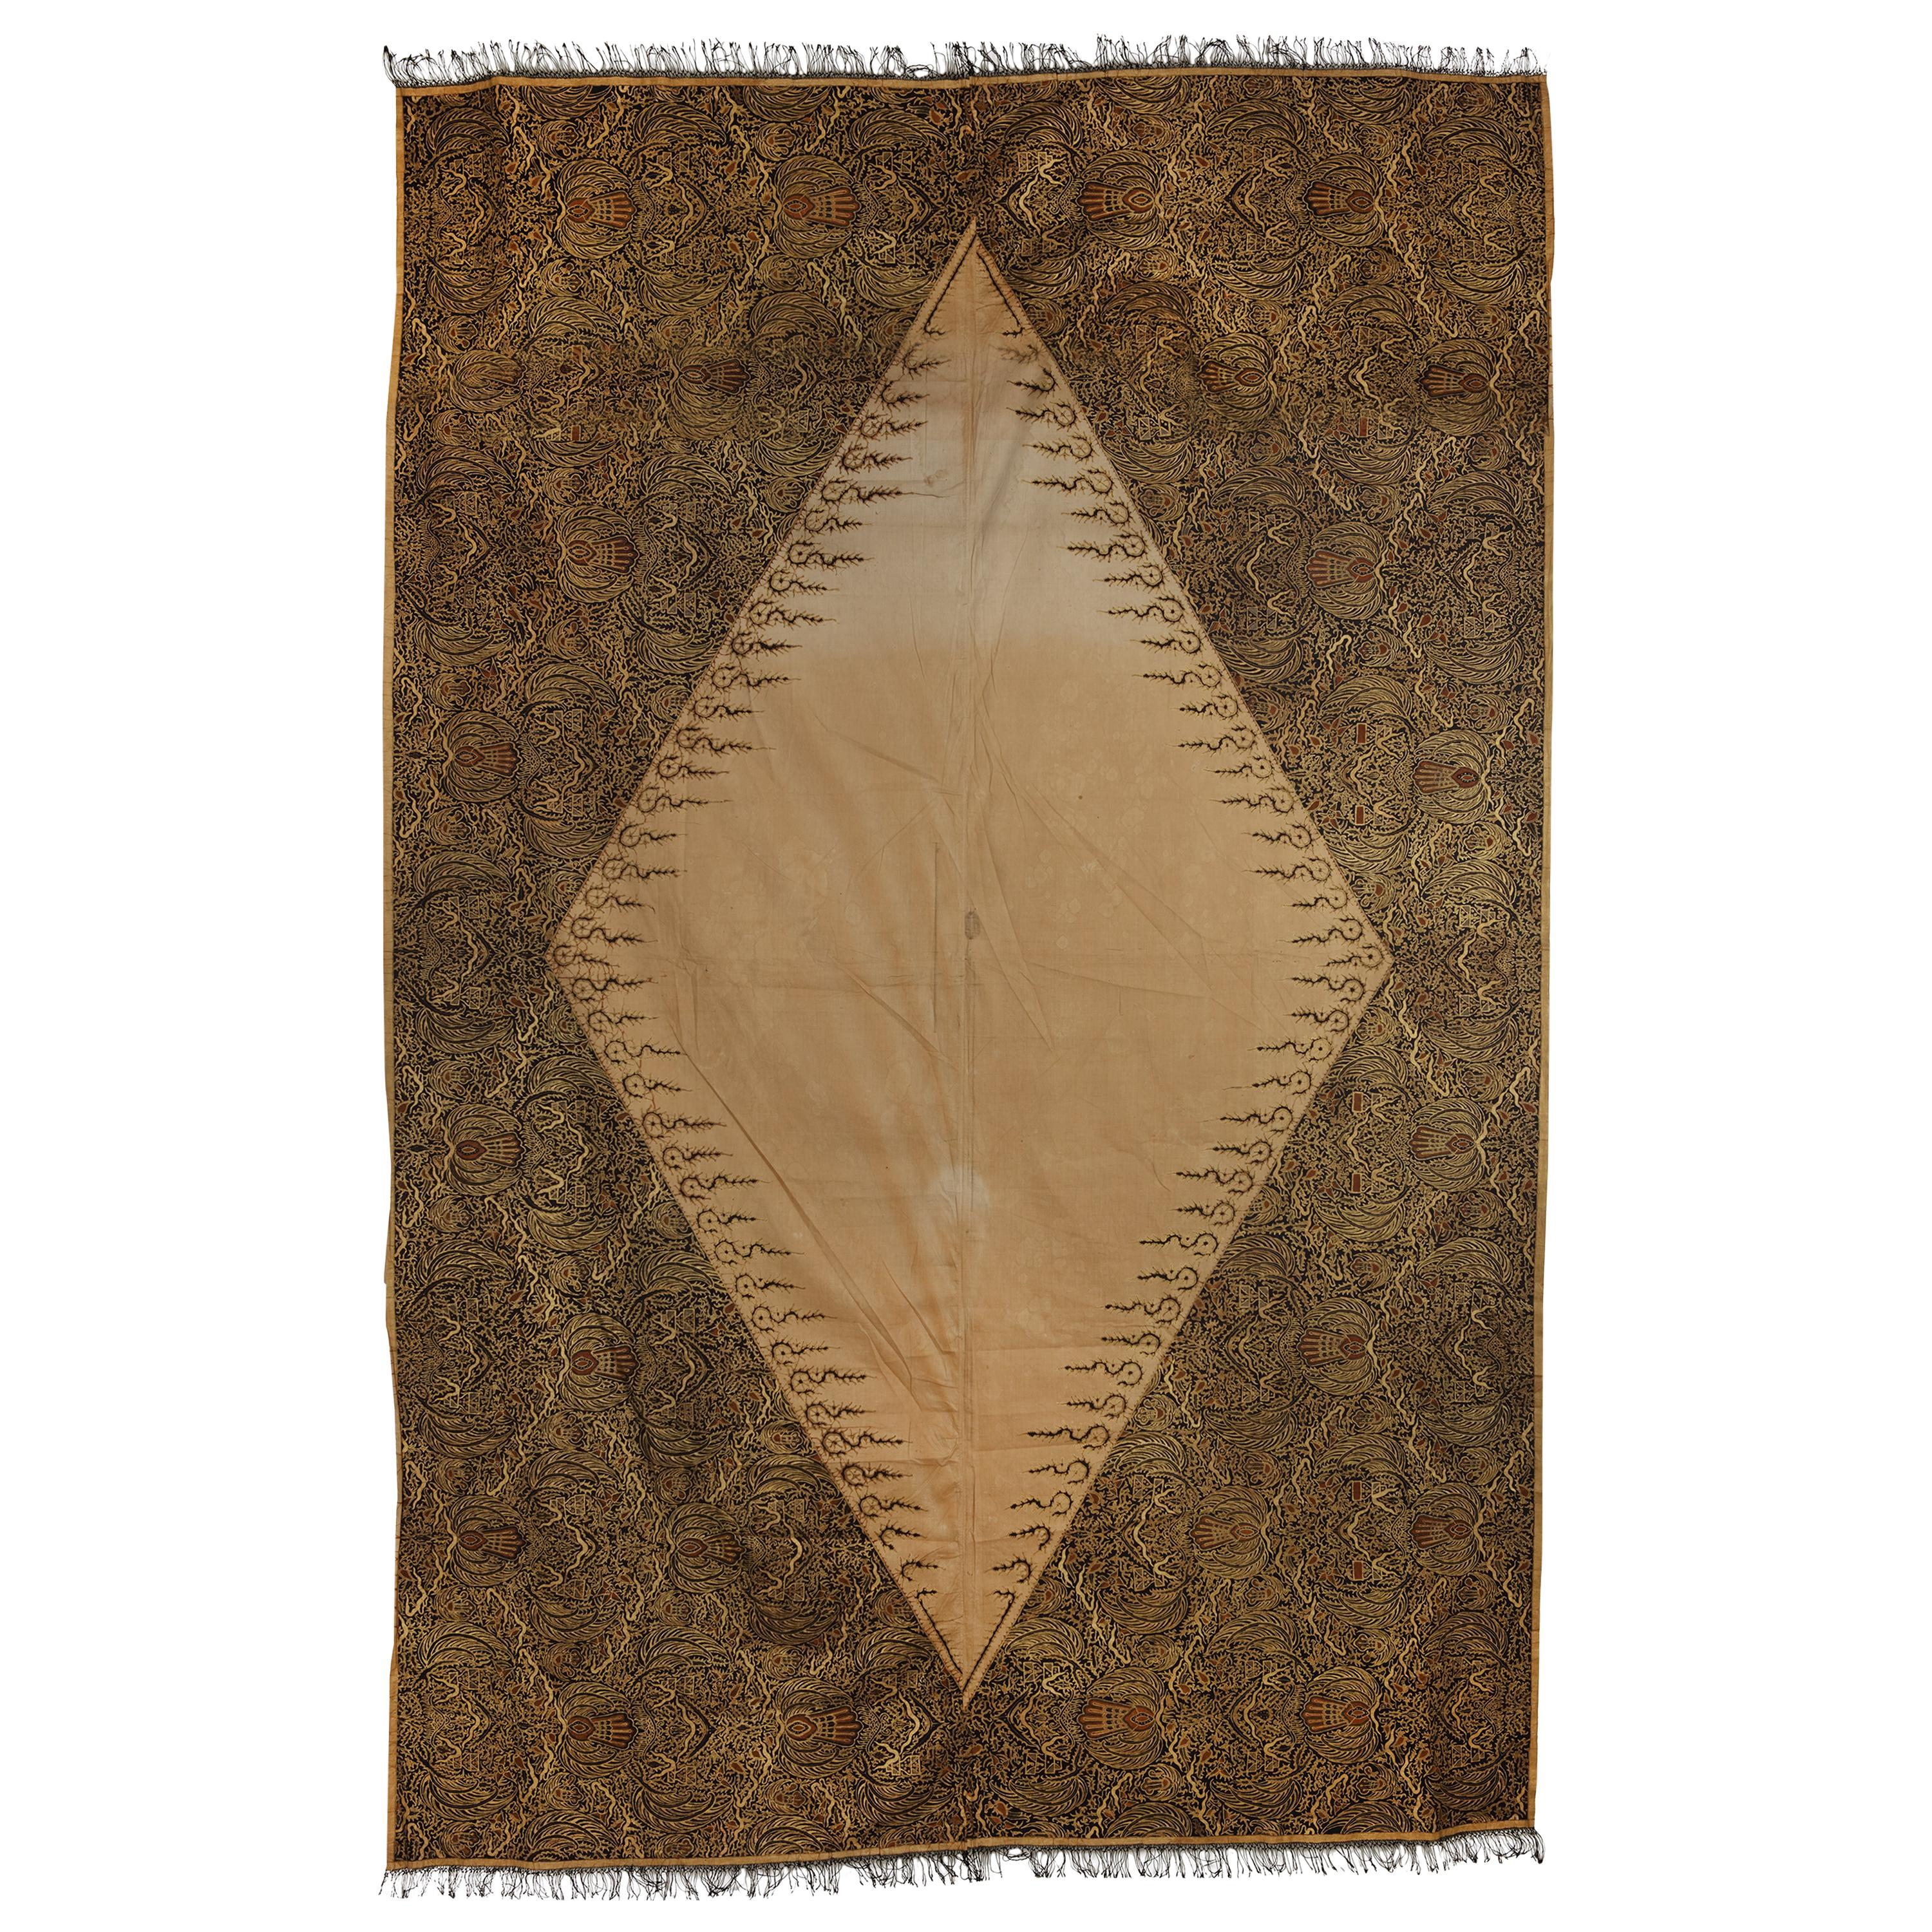 Extremely Rare Dodot Pinarada Mas or “Royal Ceremonial Skirt Cloth”, circa 1910